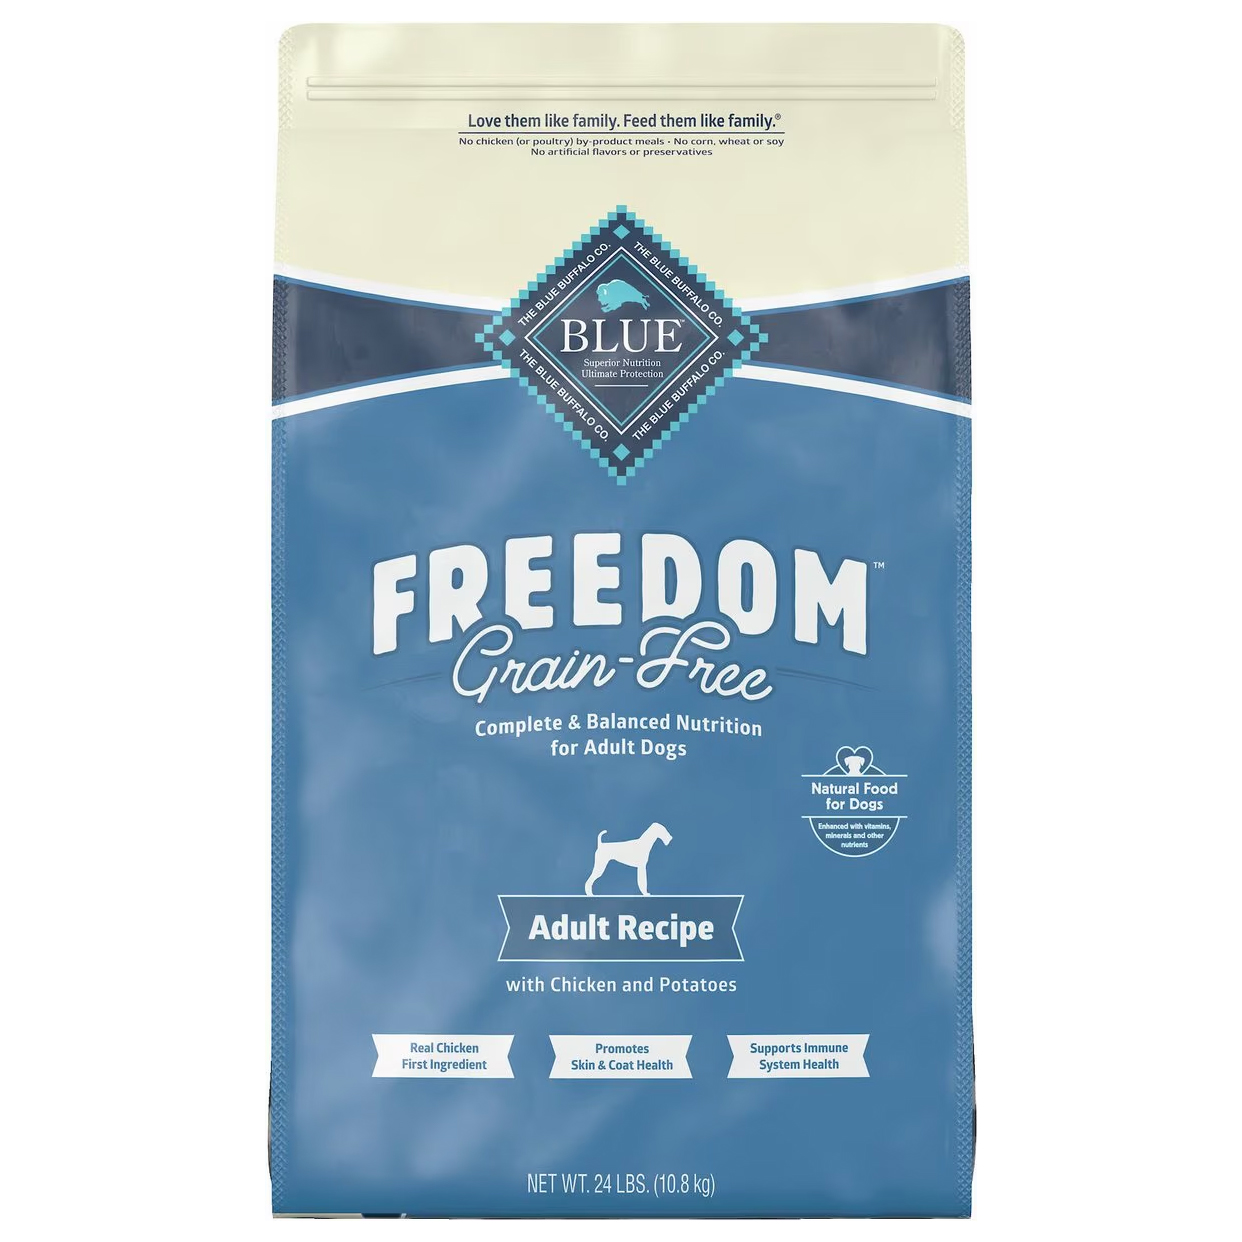 Blue Buffalo Freedom Grain-Free Dog Food